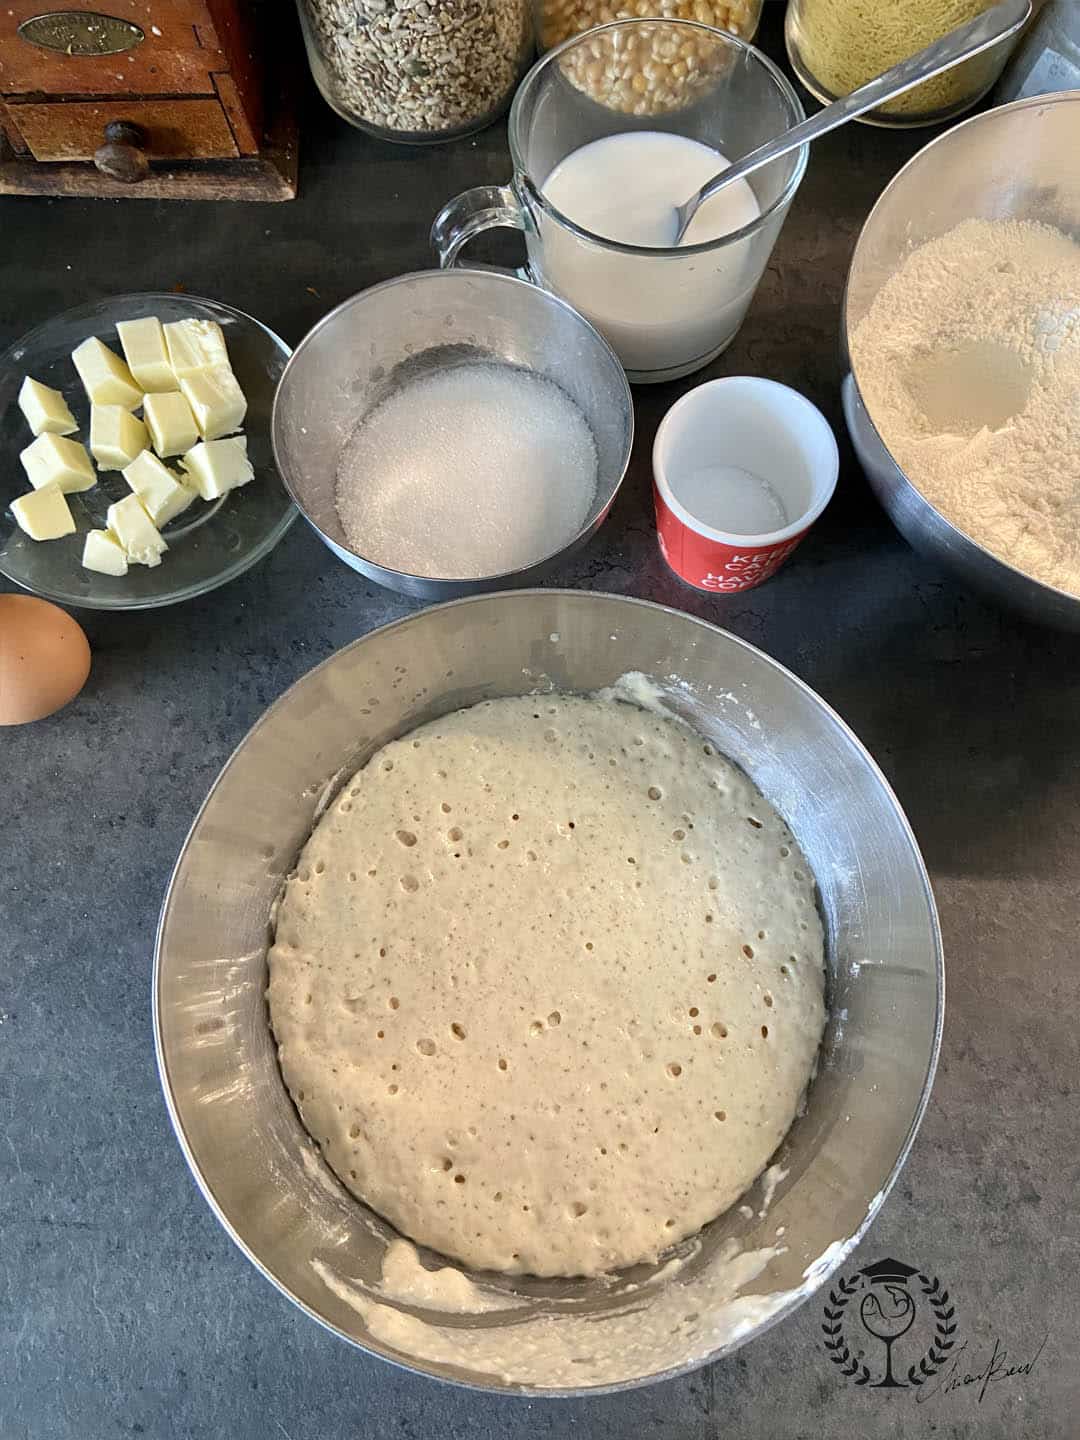 Home-made pangoccioli recipe